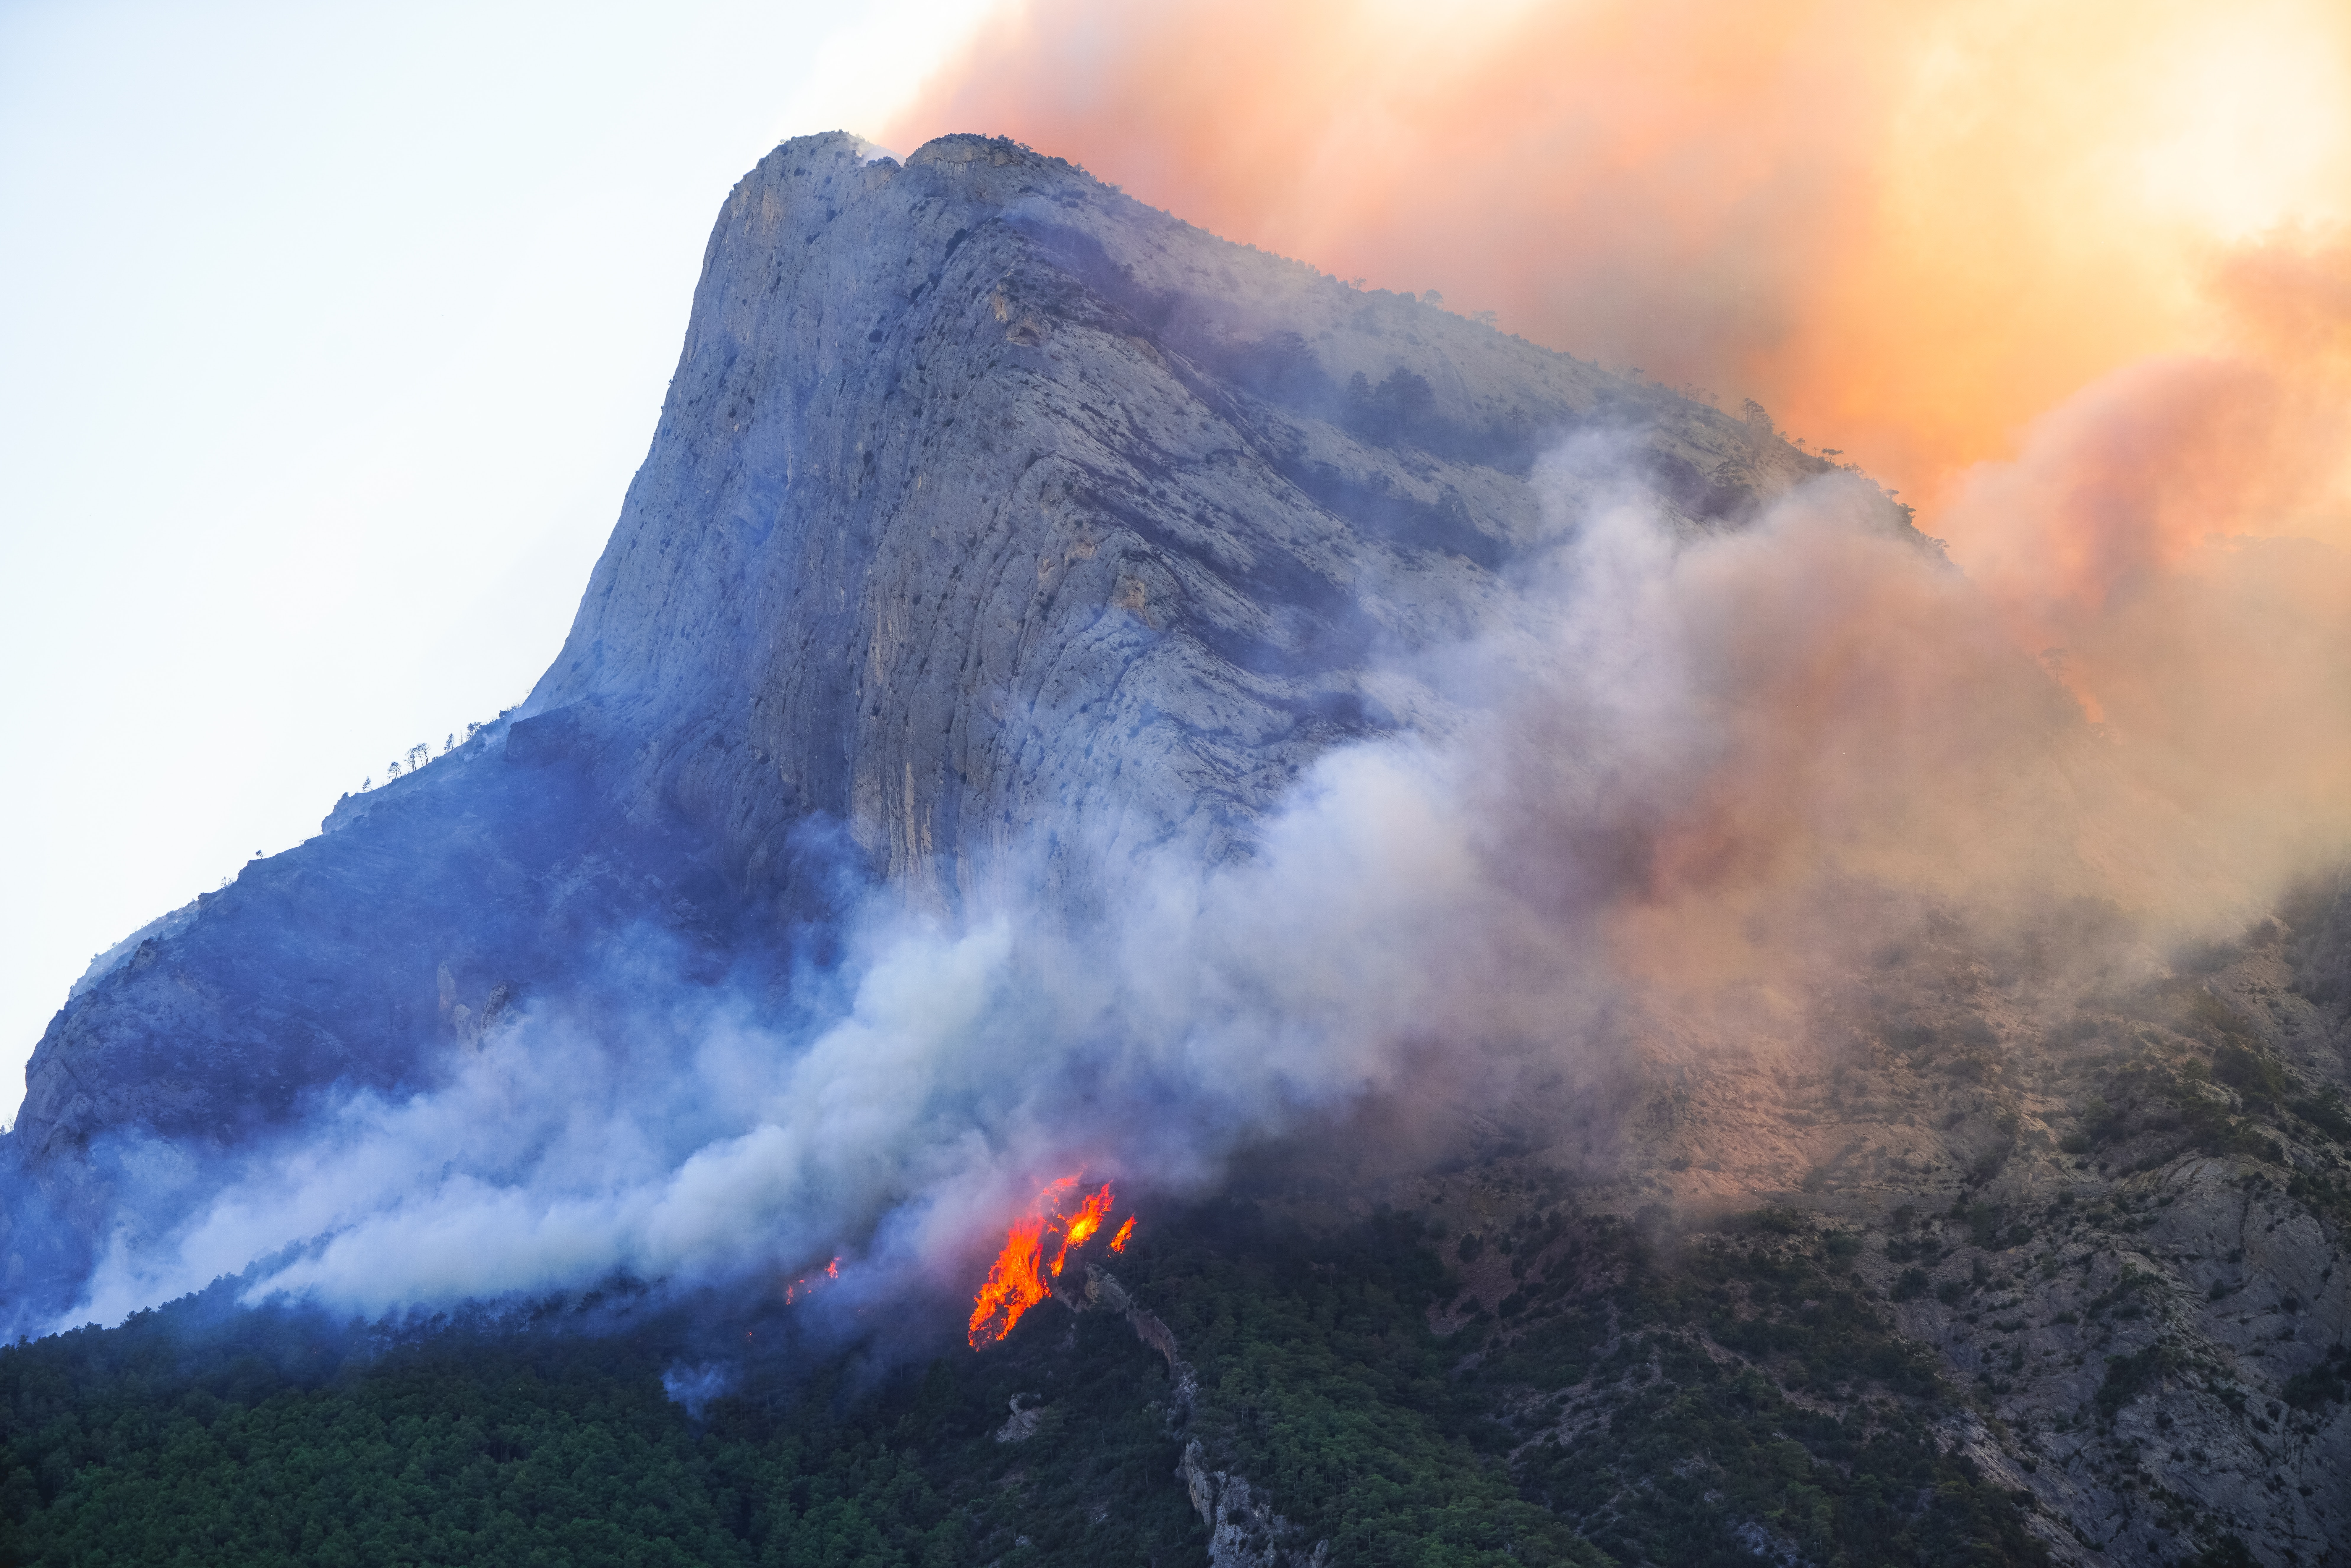 A wildfire burns vegetation beneath a rocky mountain peak.